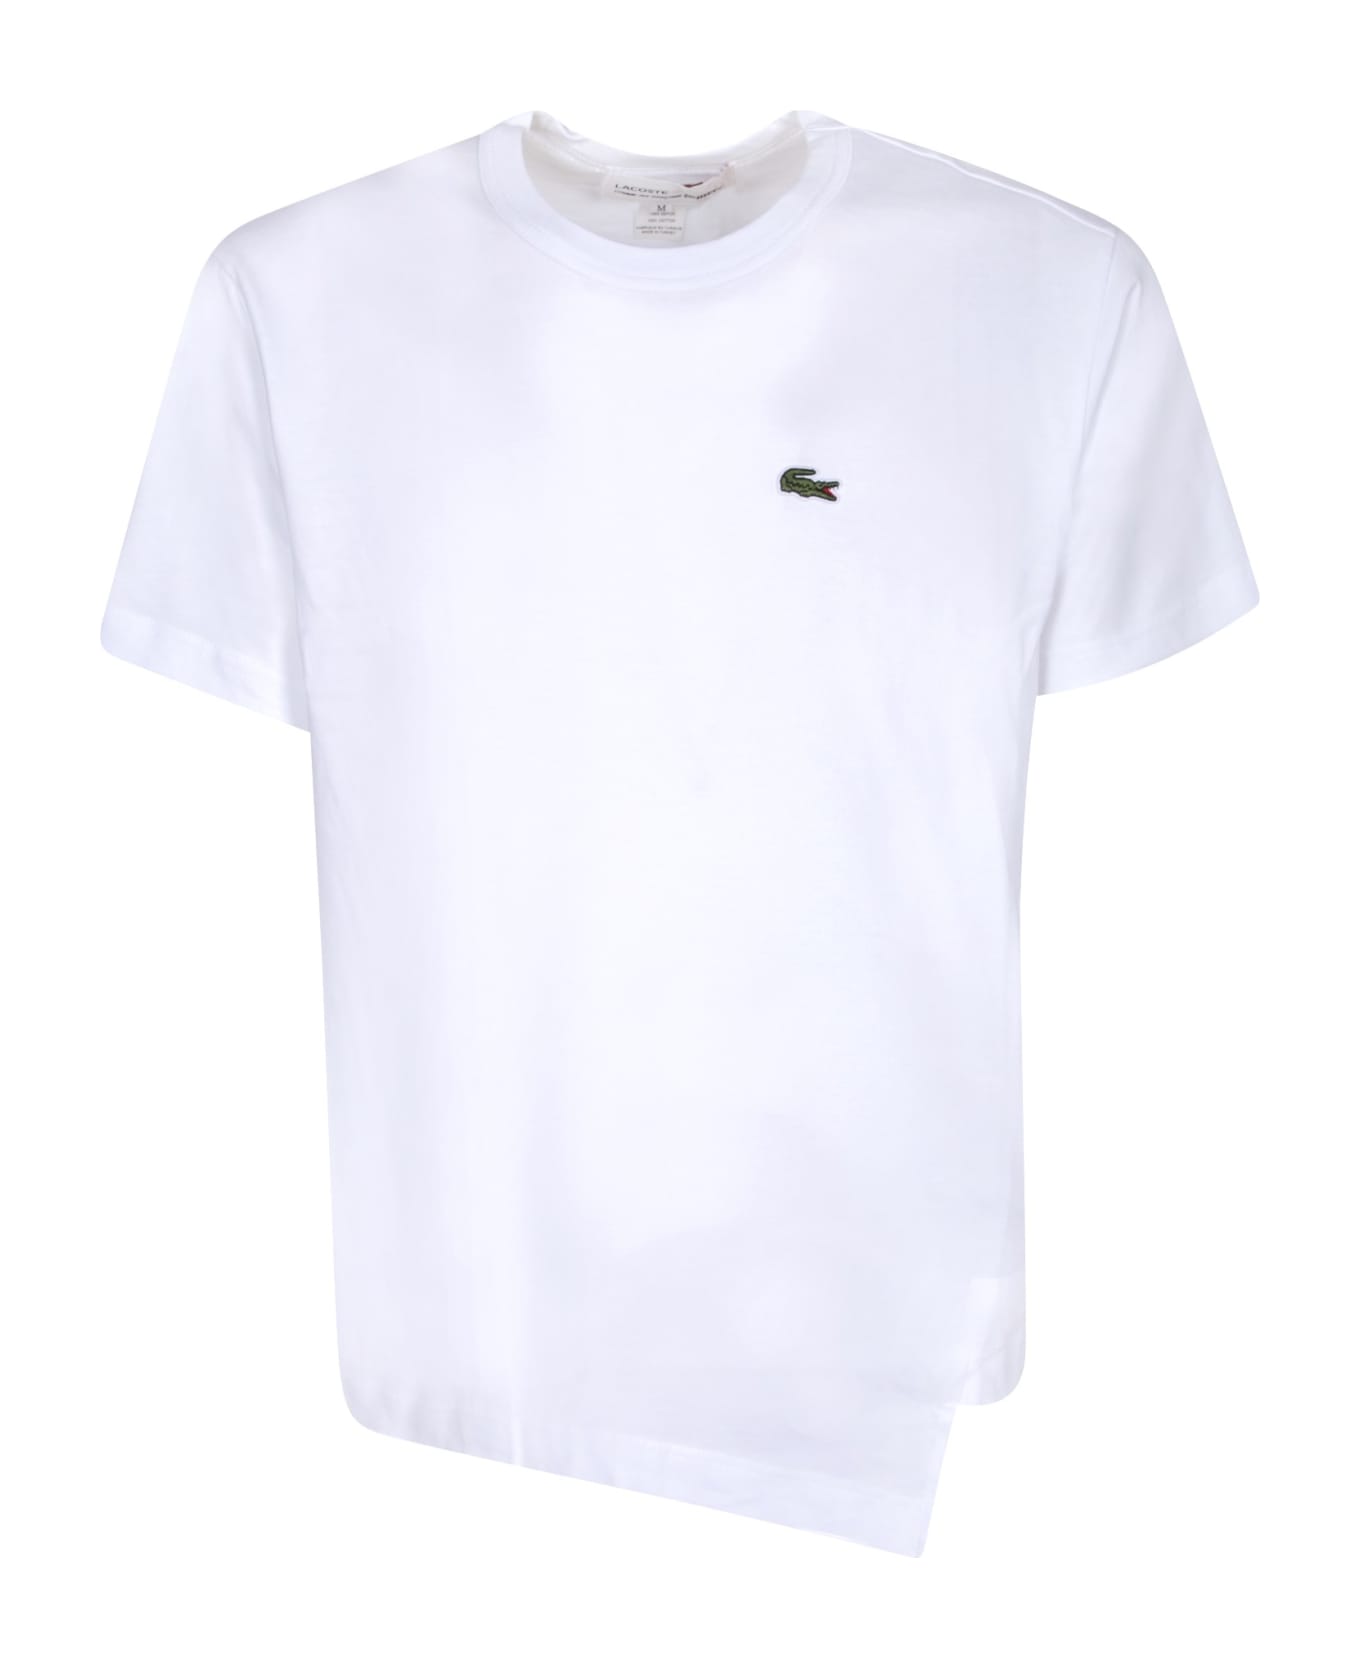 Comme des Garçons Shirt Asymmetric White T-shirt - White シャツ